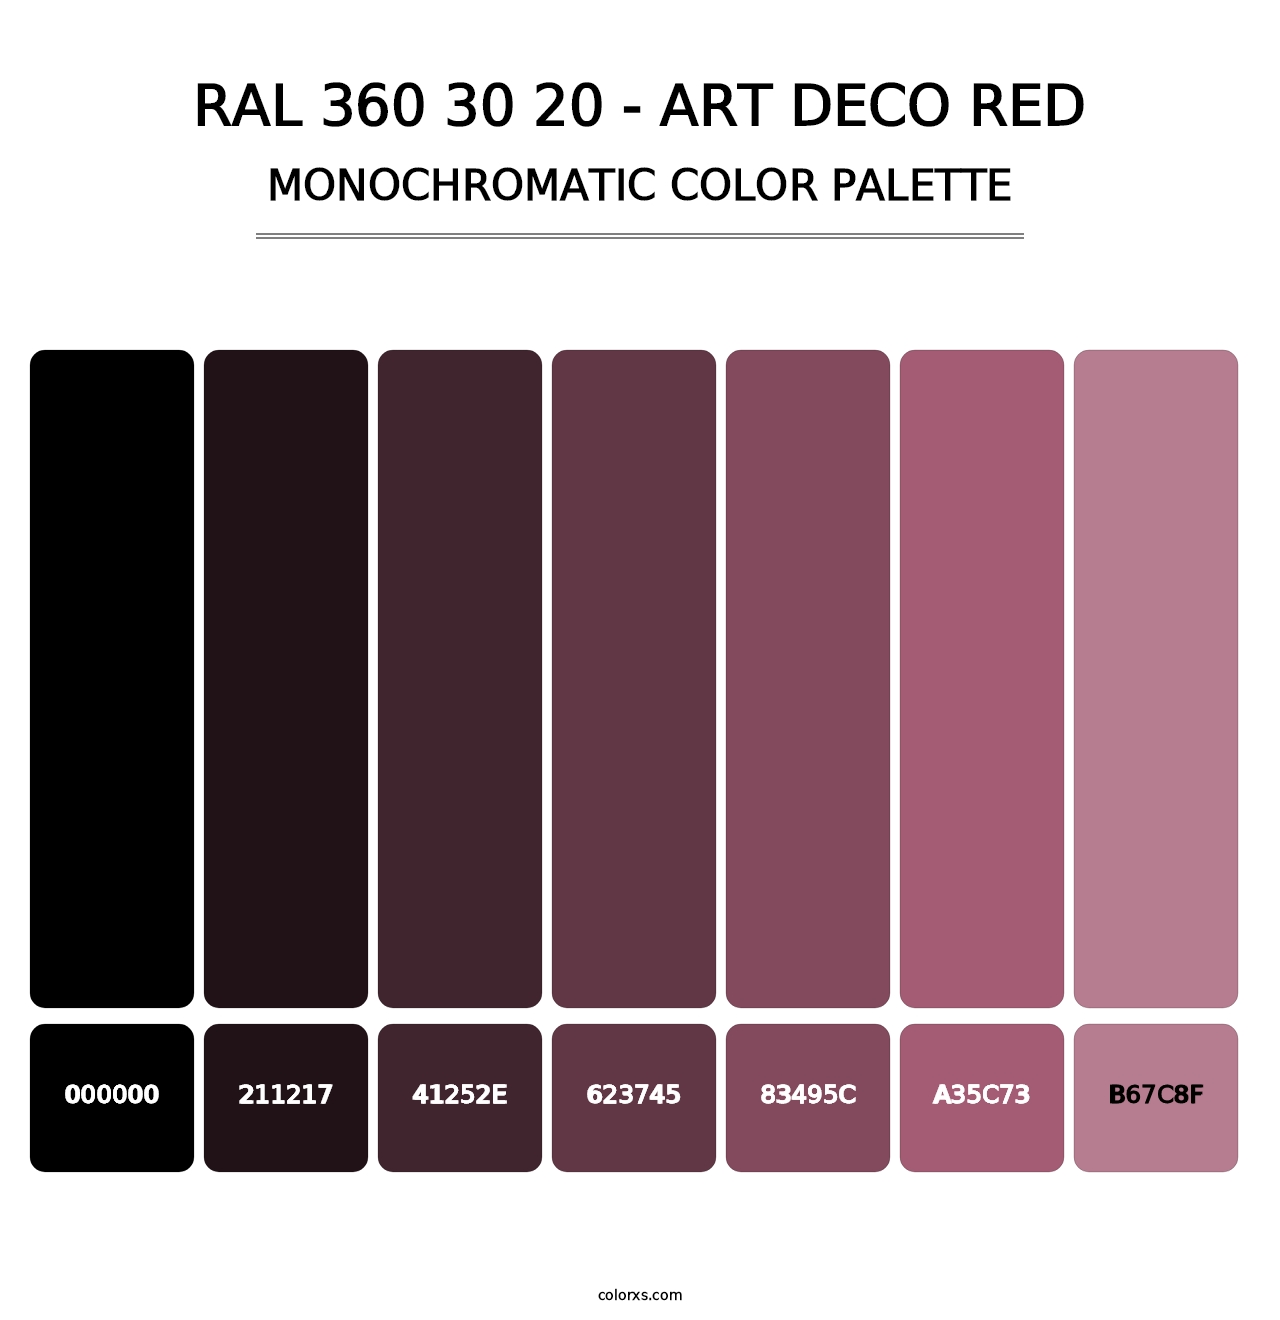 RAL 360 30 20 - Art Deco Red - Monochromatic Color Palette